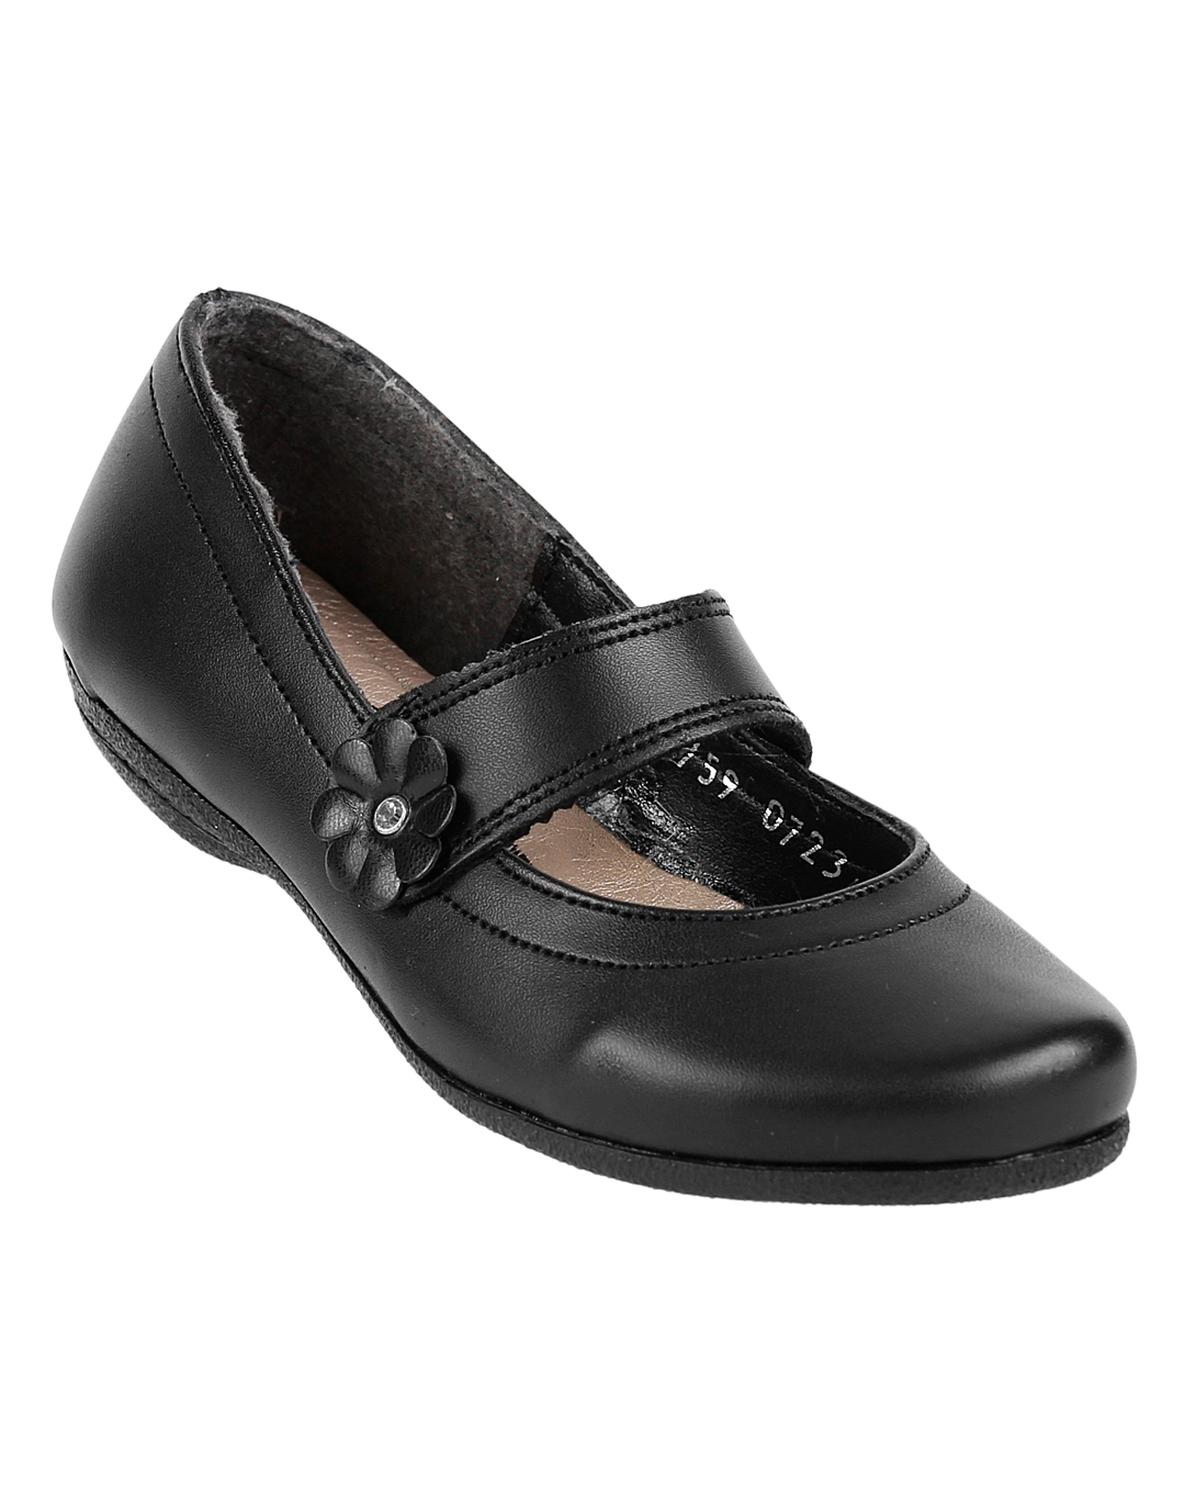 Zapato Escolar Piso Niña Negro Tacto Piel Stfashion 16803803